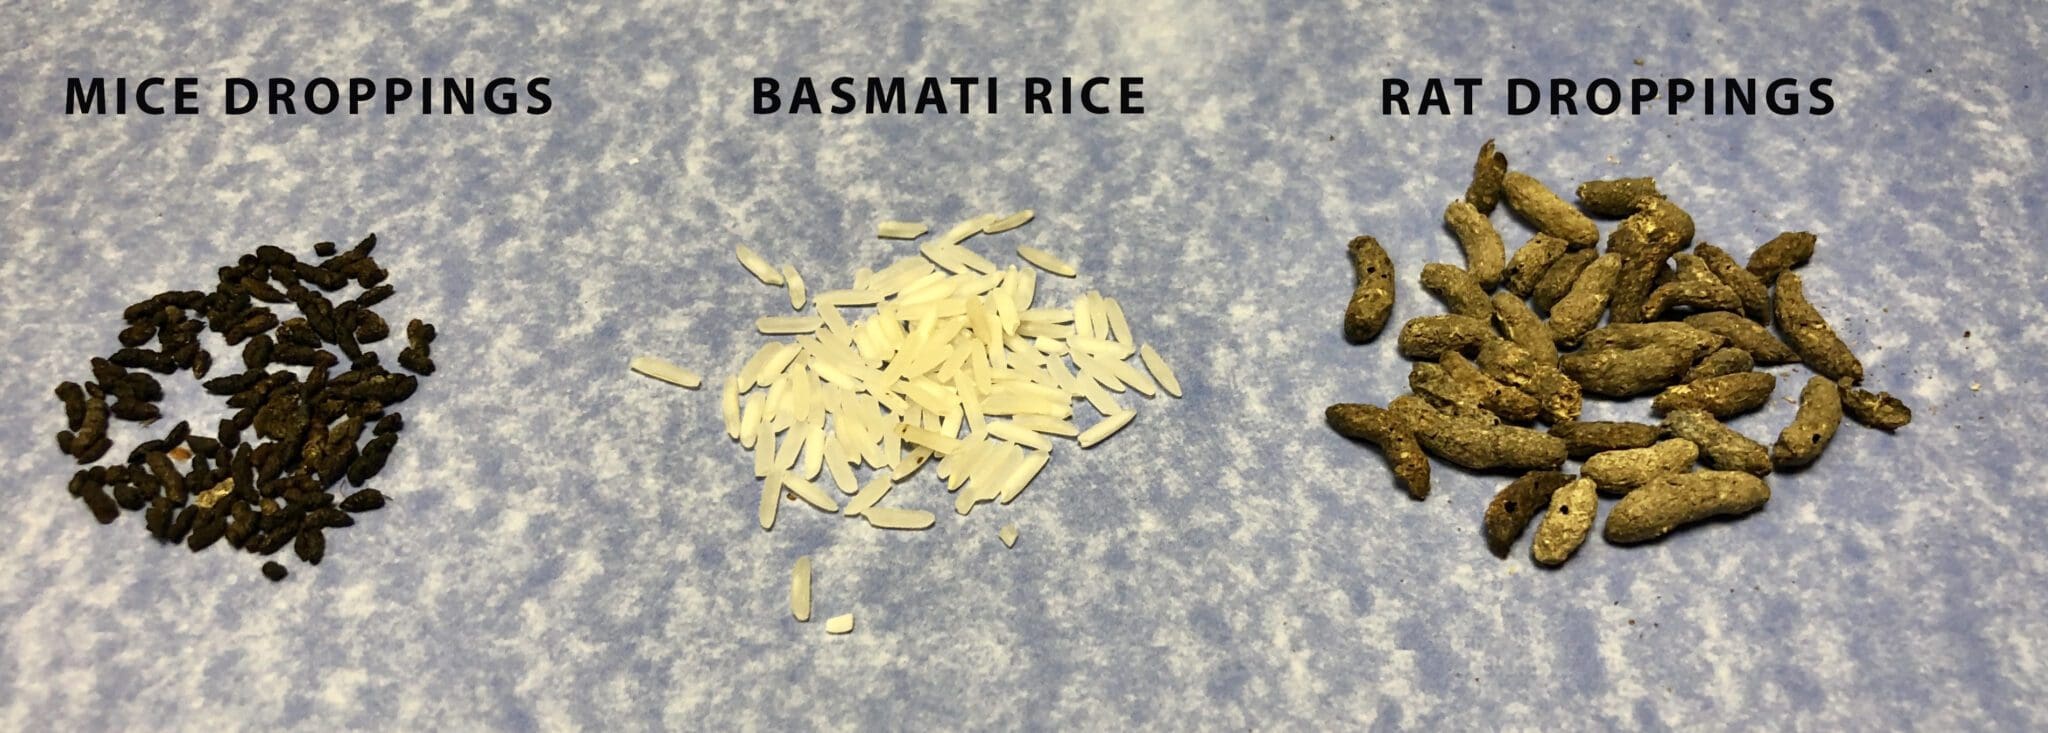 Mice Rice Rat Droppings 2048x733 